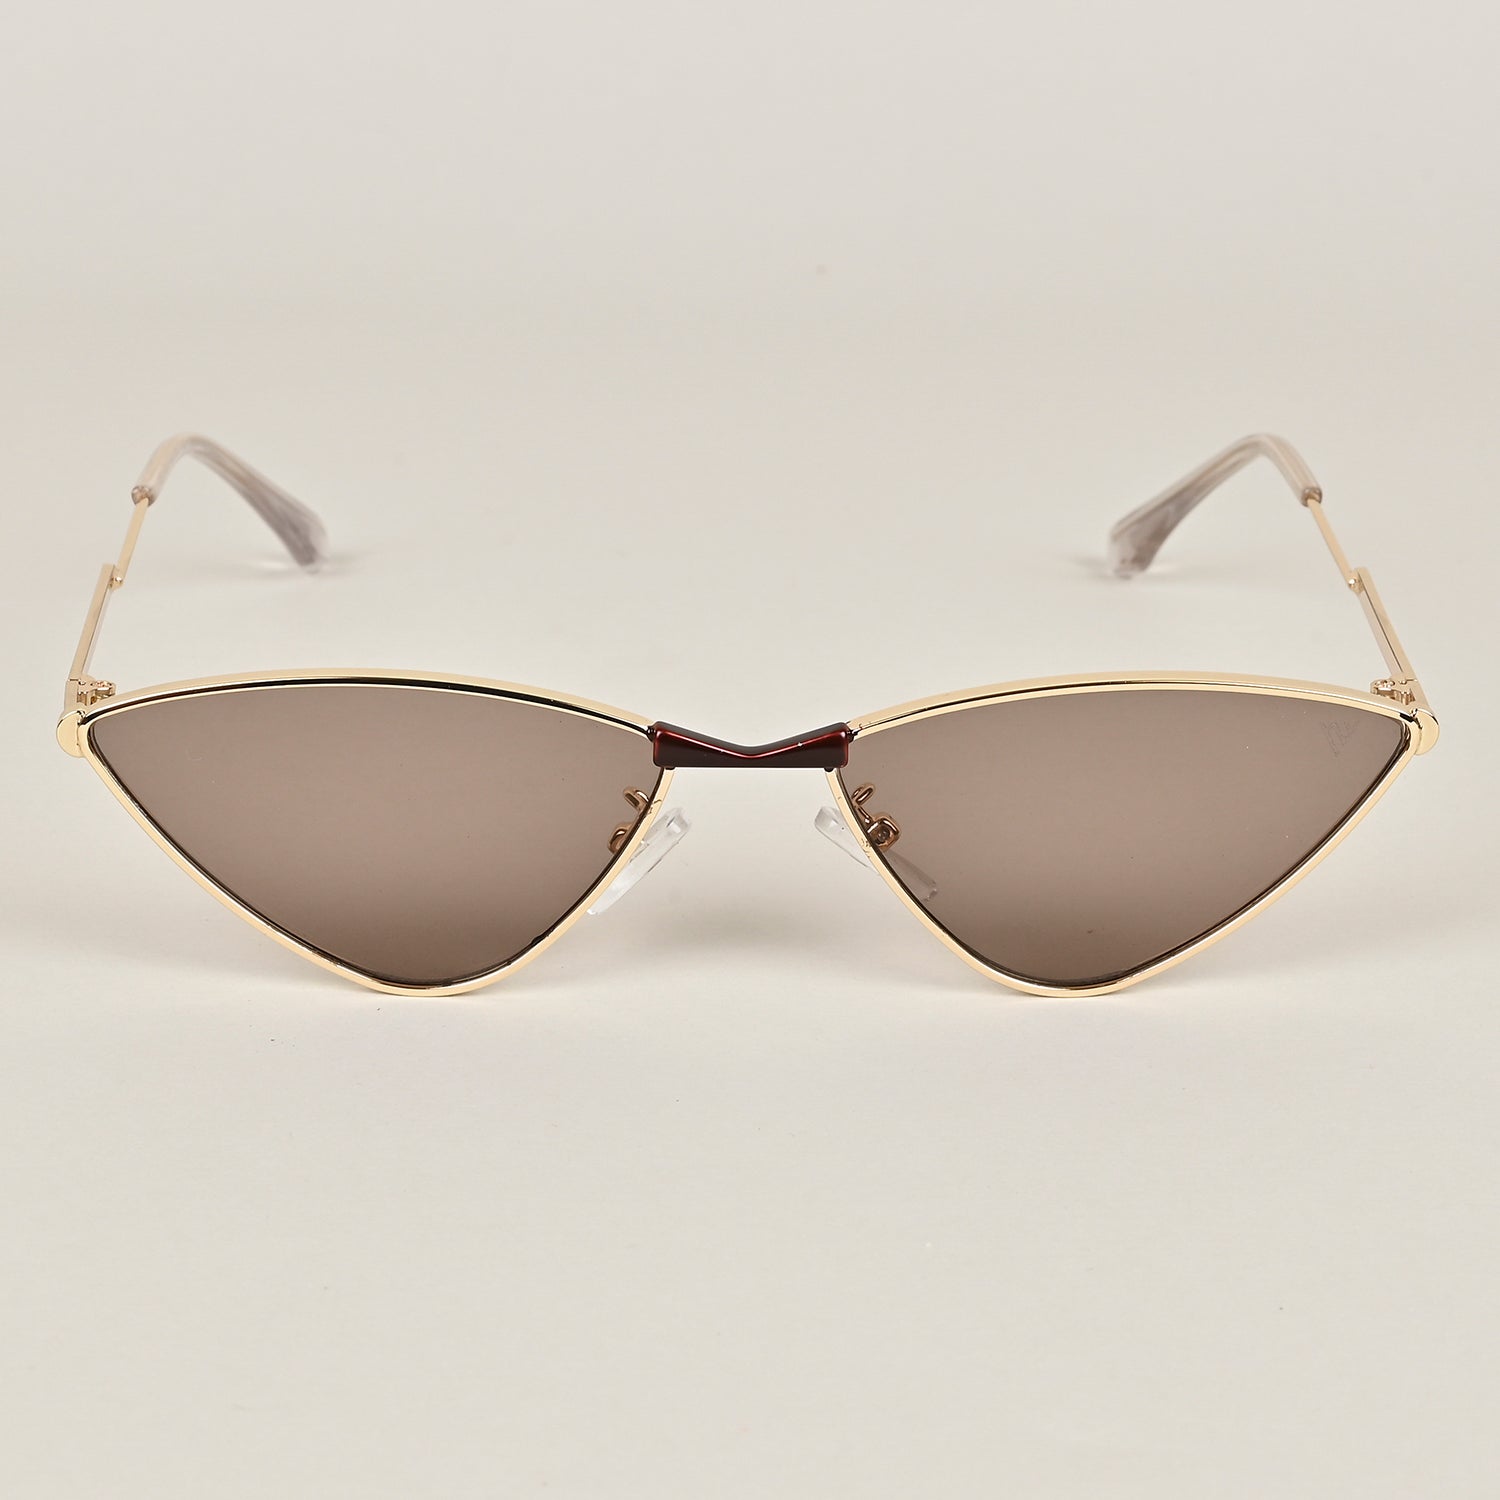 Voyage Brown Cateye Sunglasses - MG3435